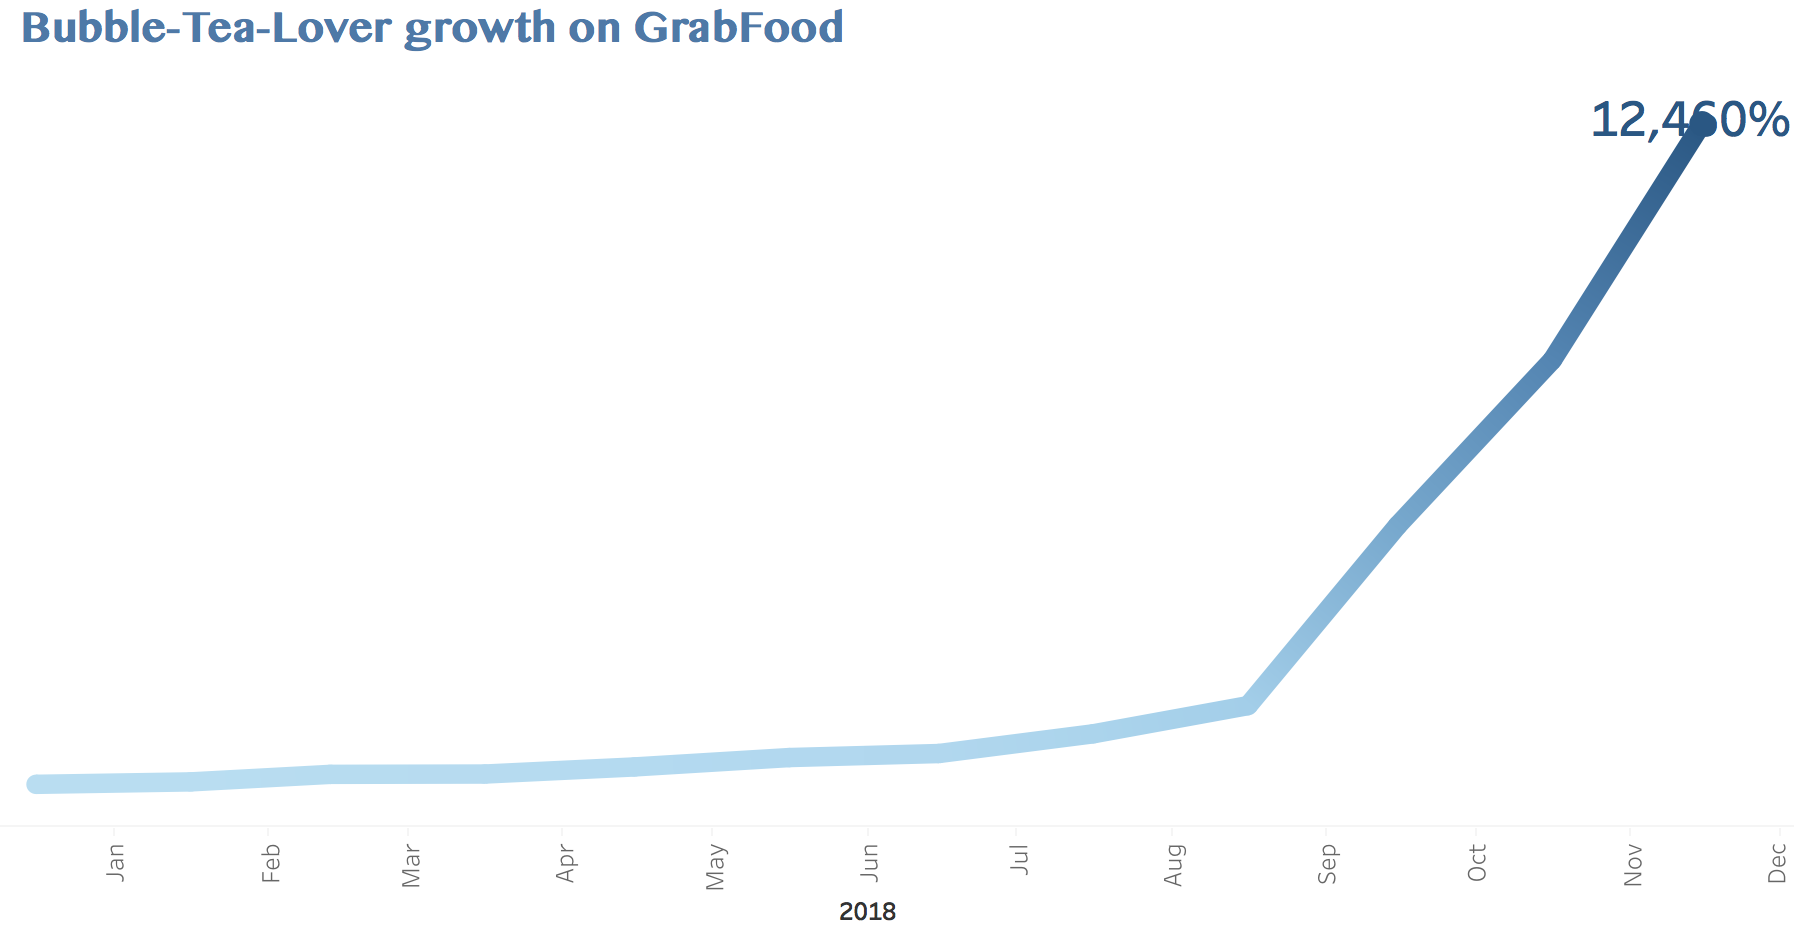 Bubble-Tea-Lover growth on GrabFood